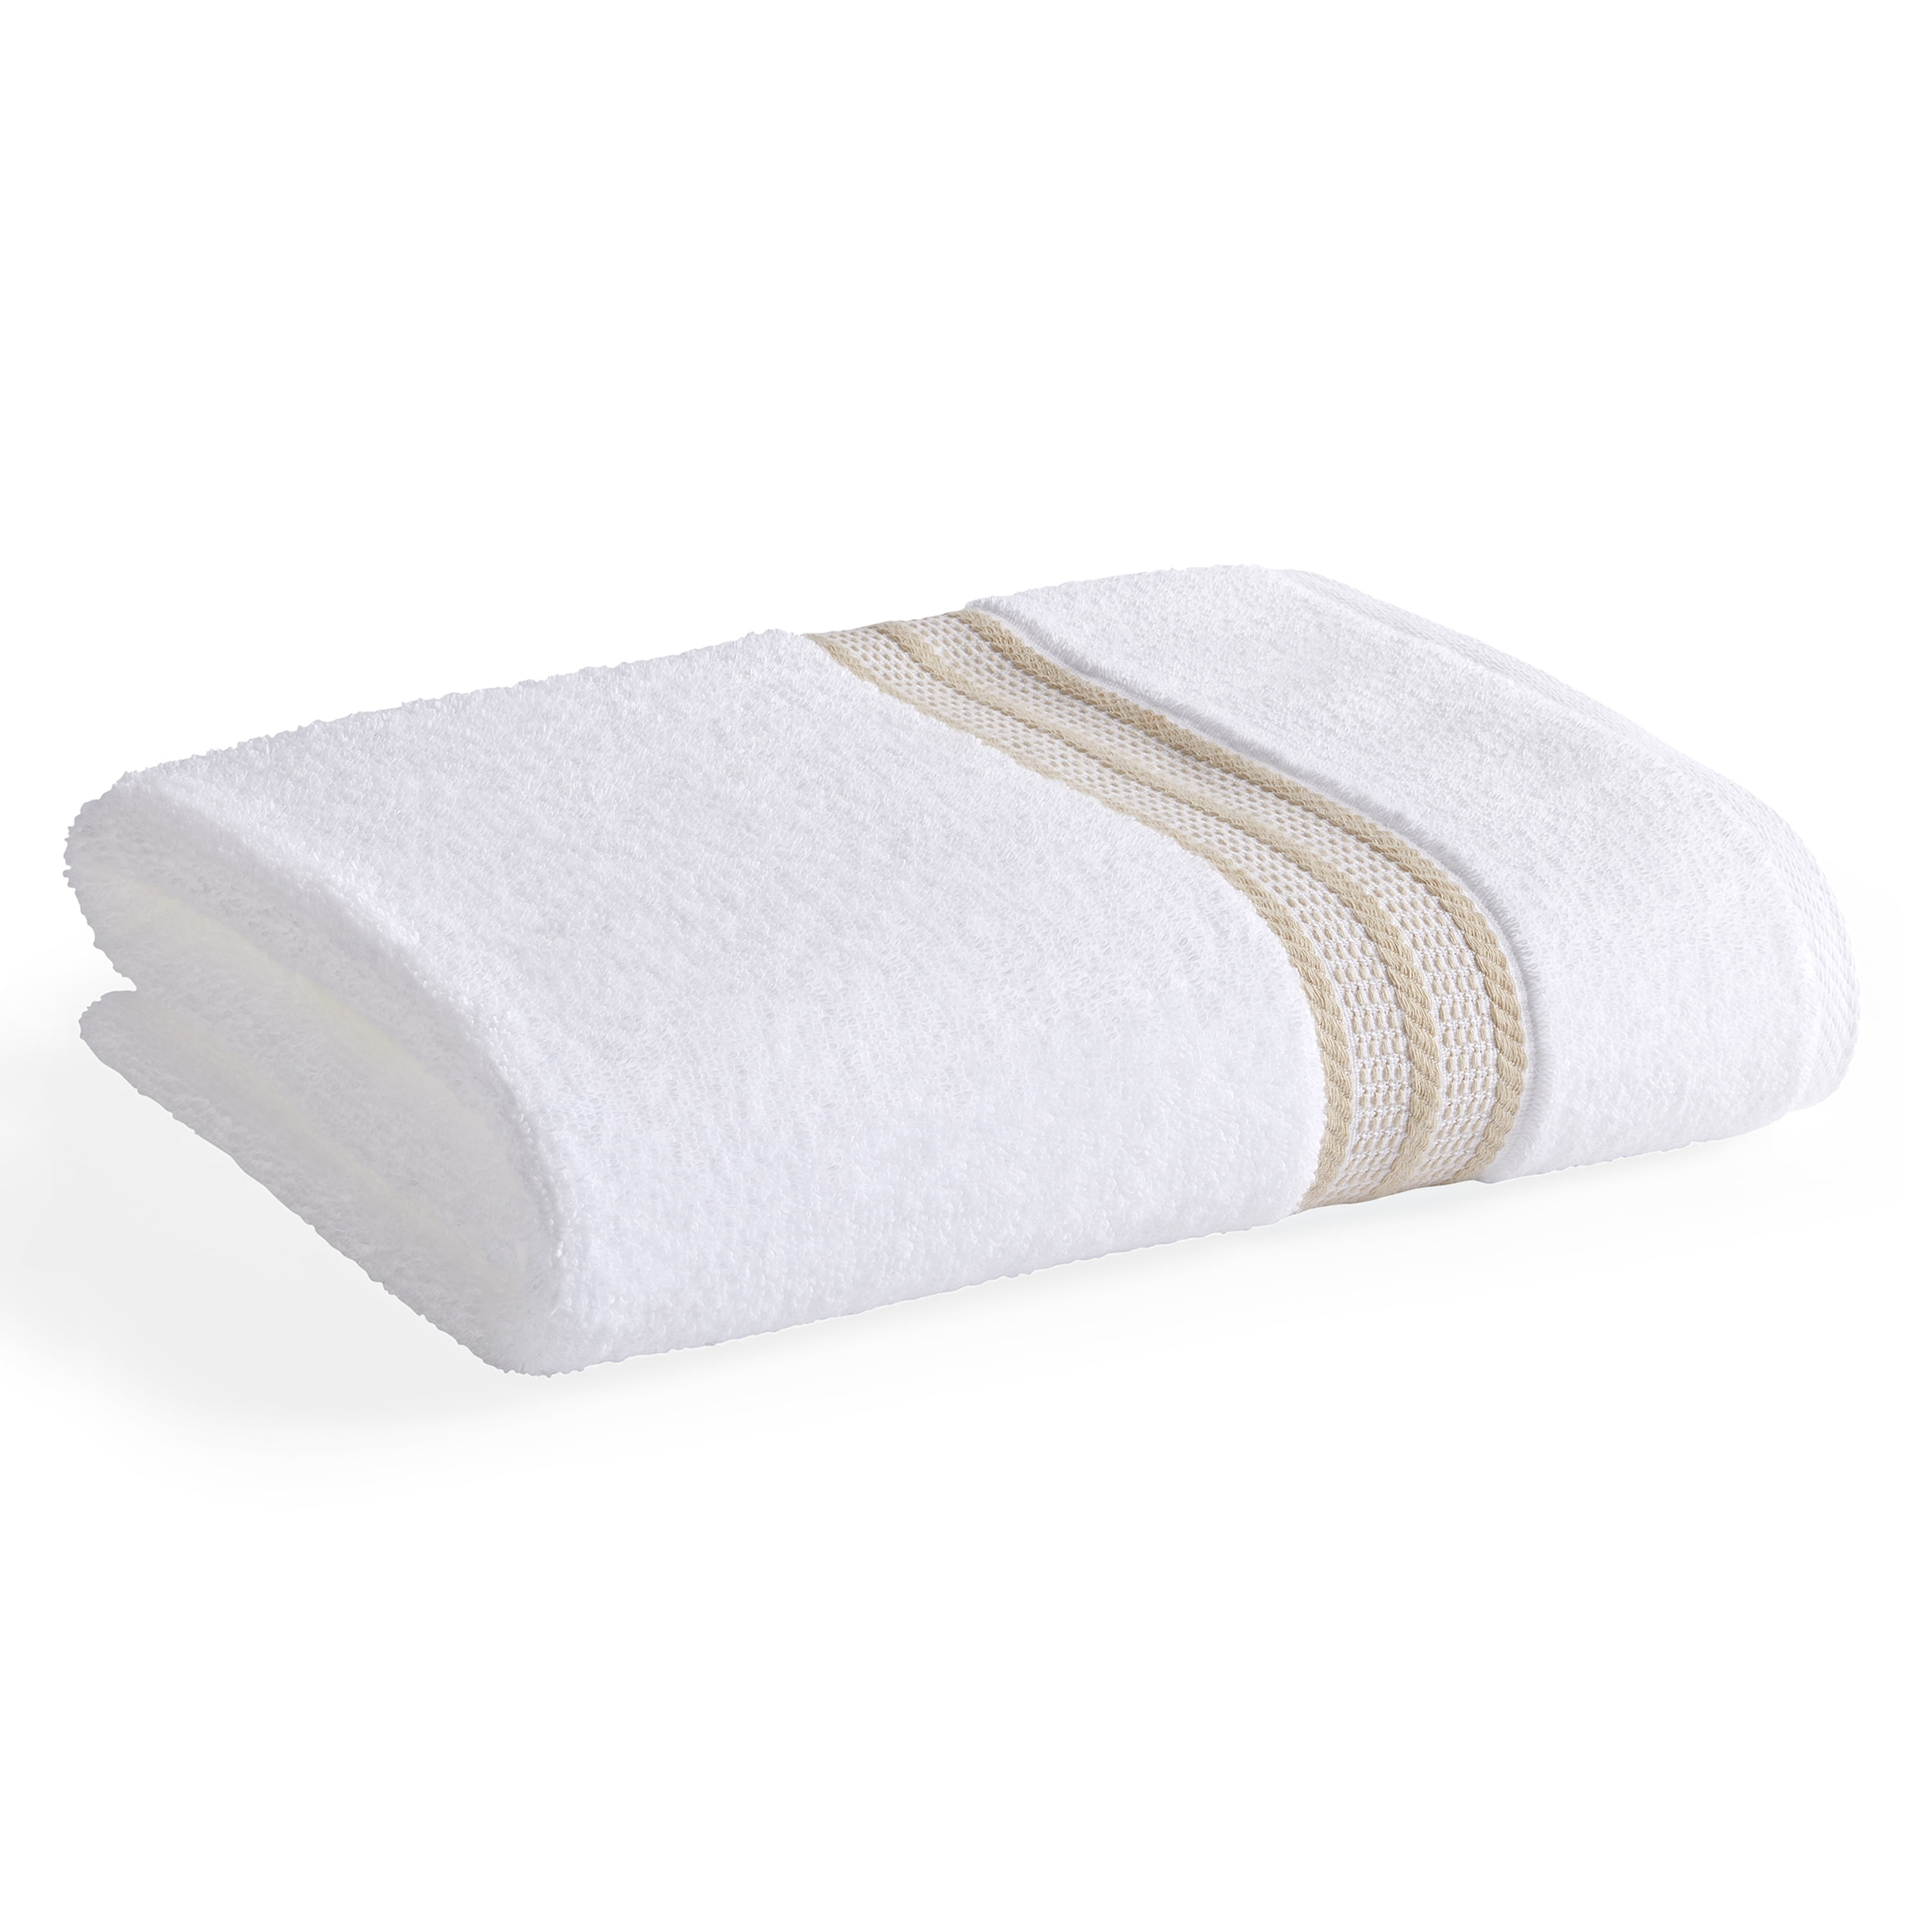 2 Plain White Zero Twist 100% Cotton Baby Hooded Towel with Ears 75 x 75 cm 